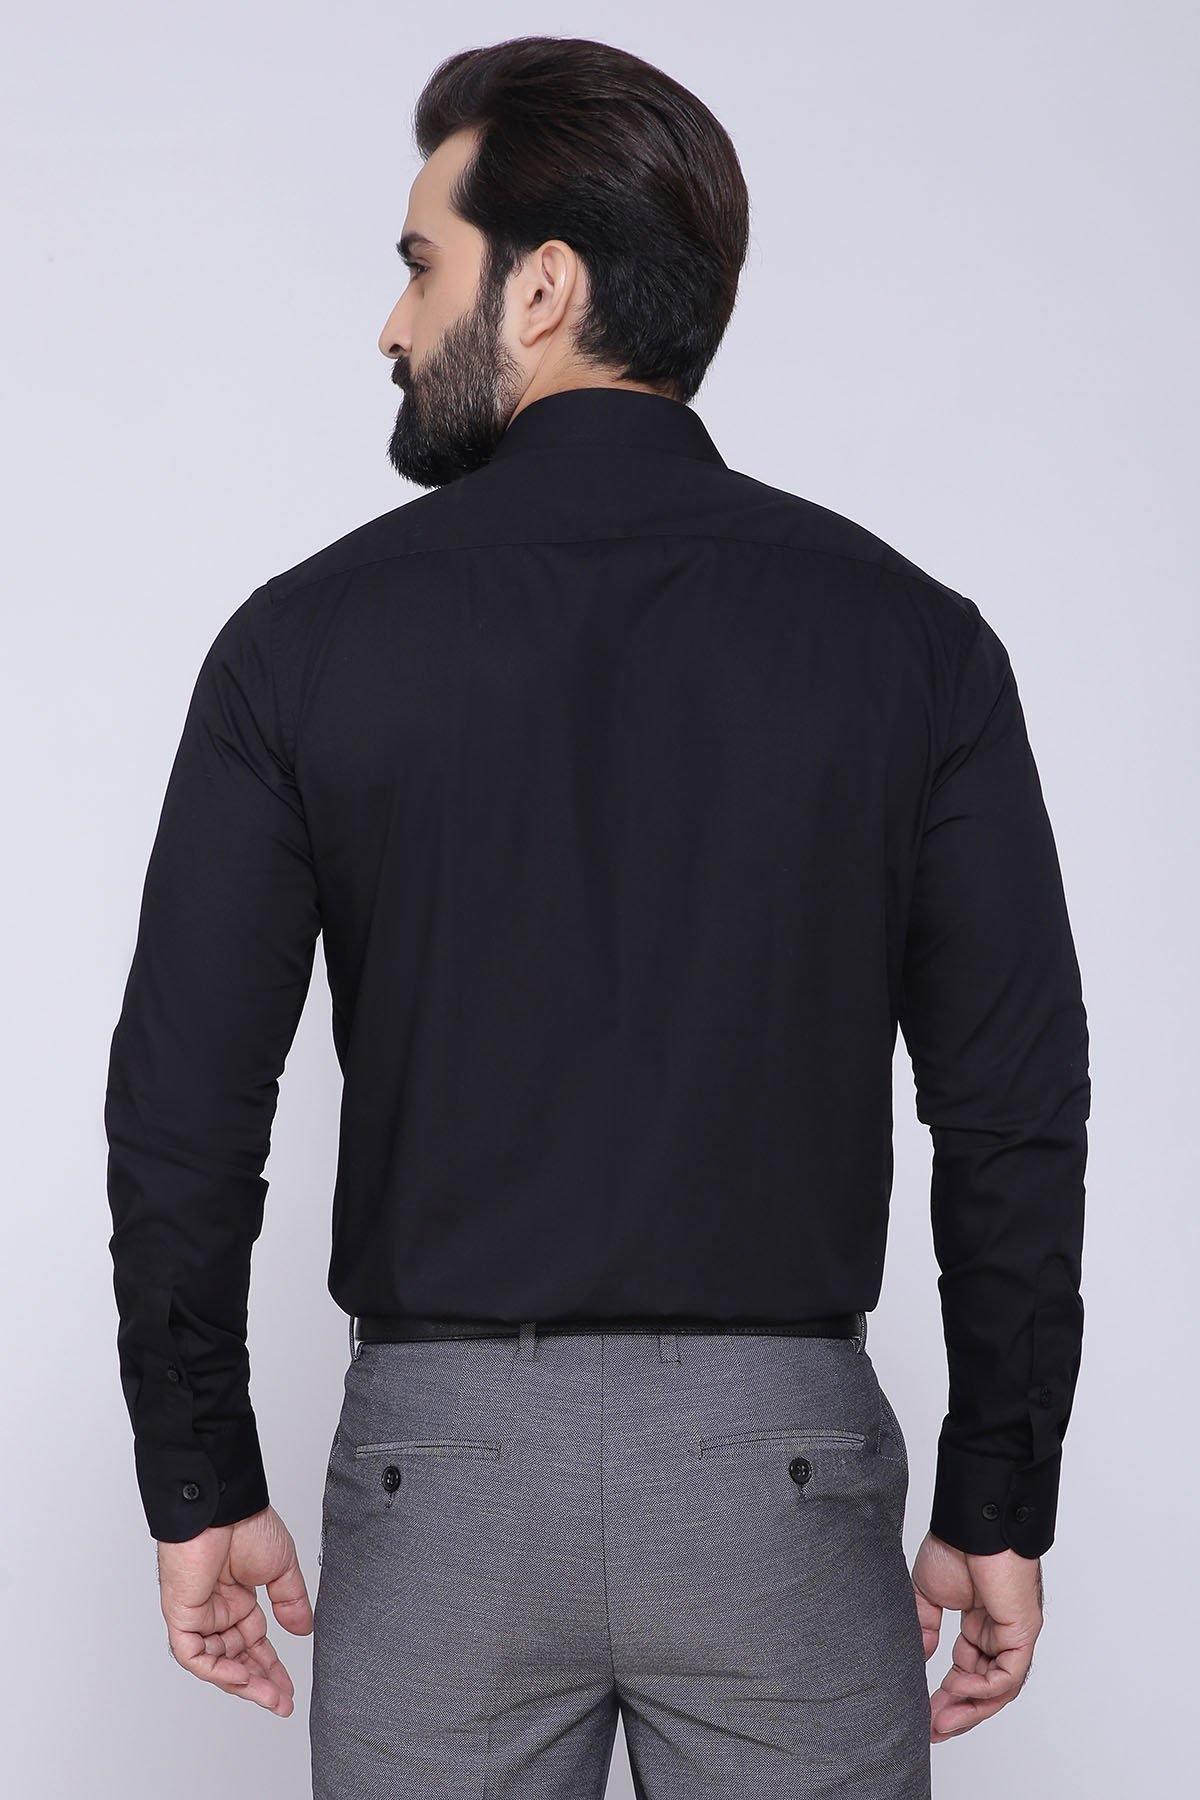 DRESS SHIRT FULL COLLAR BLACK at Charcoal Clothing